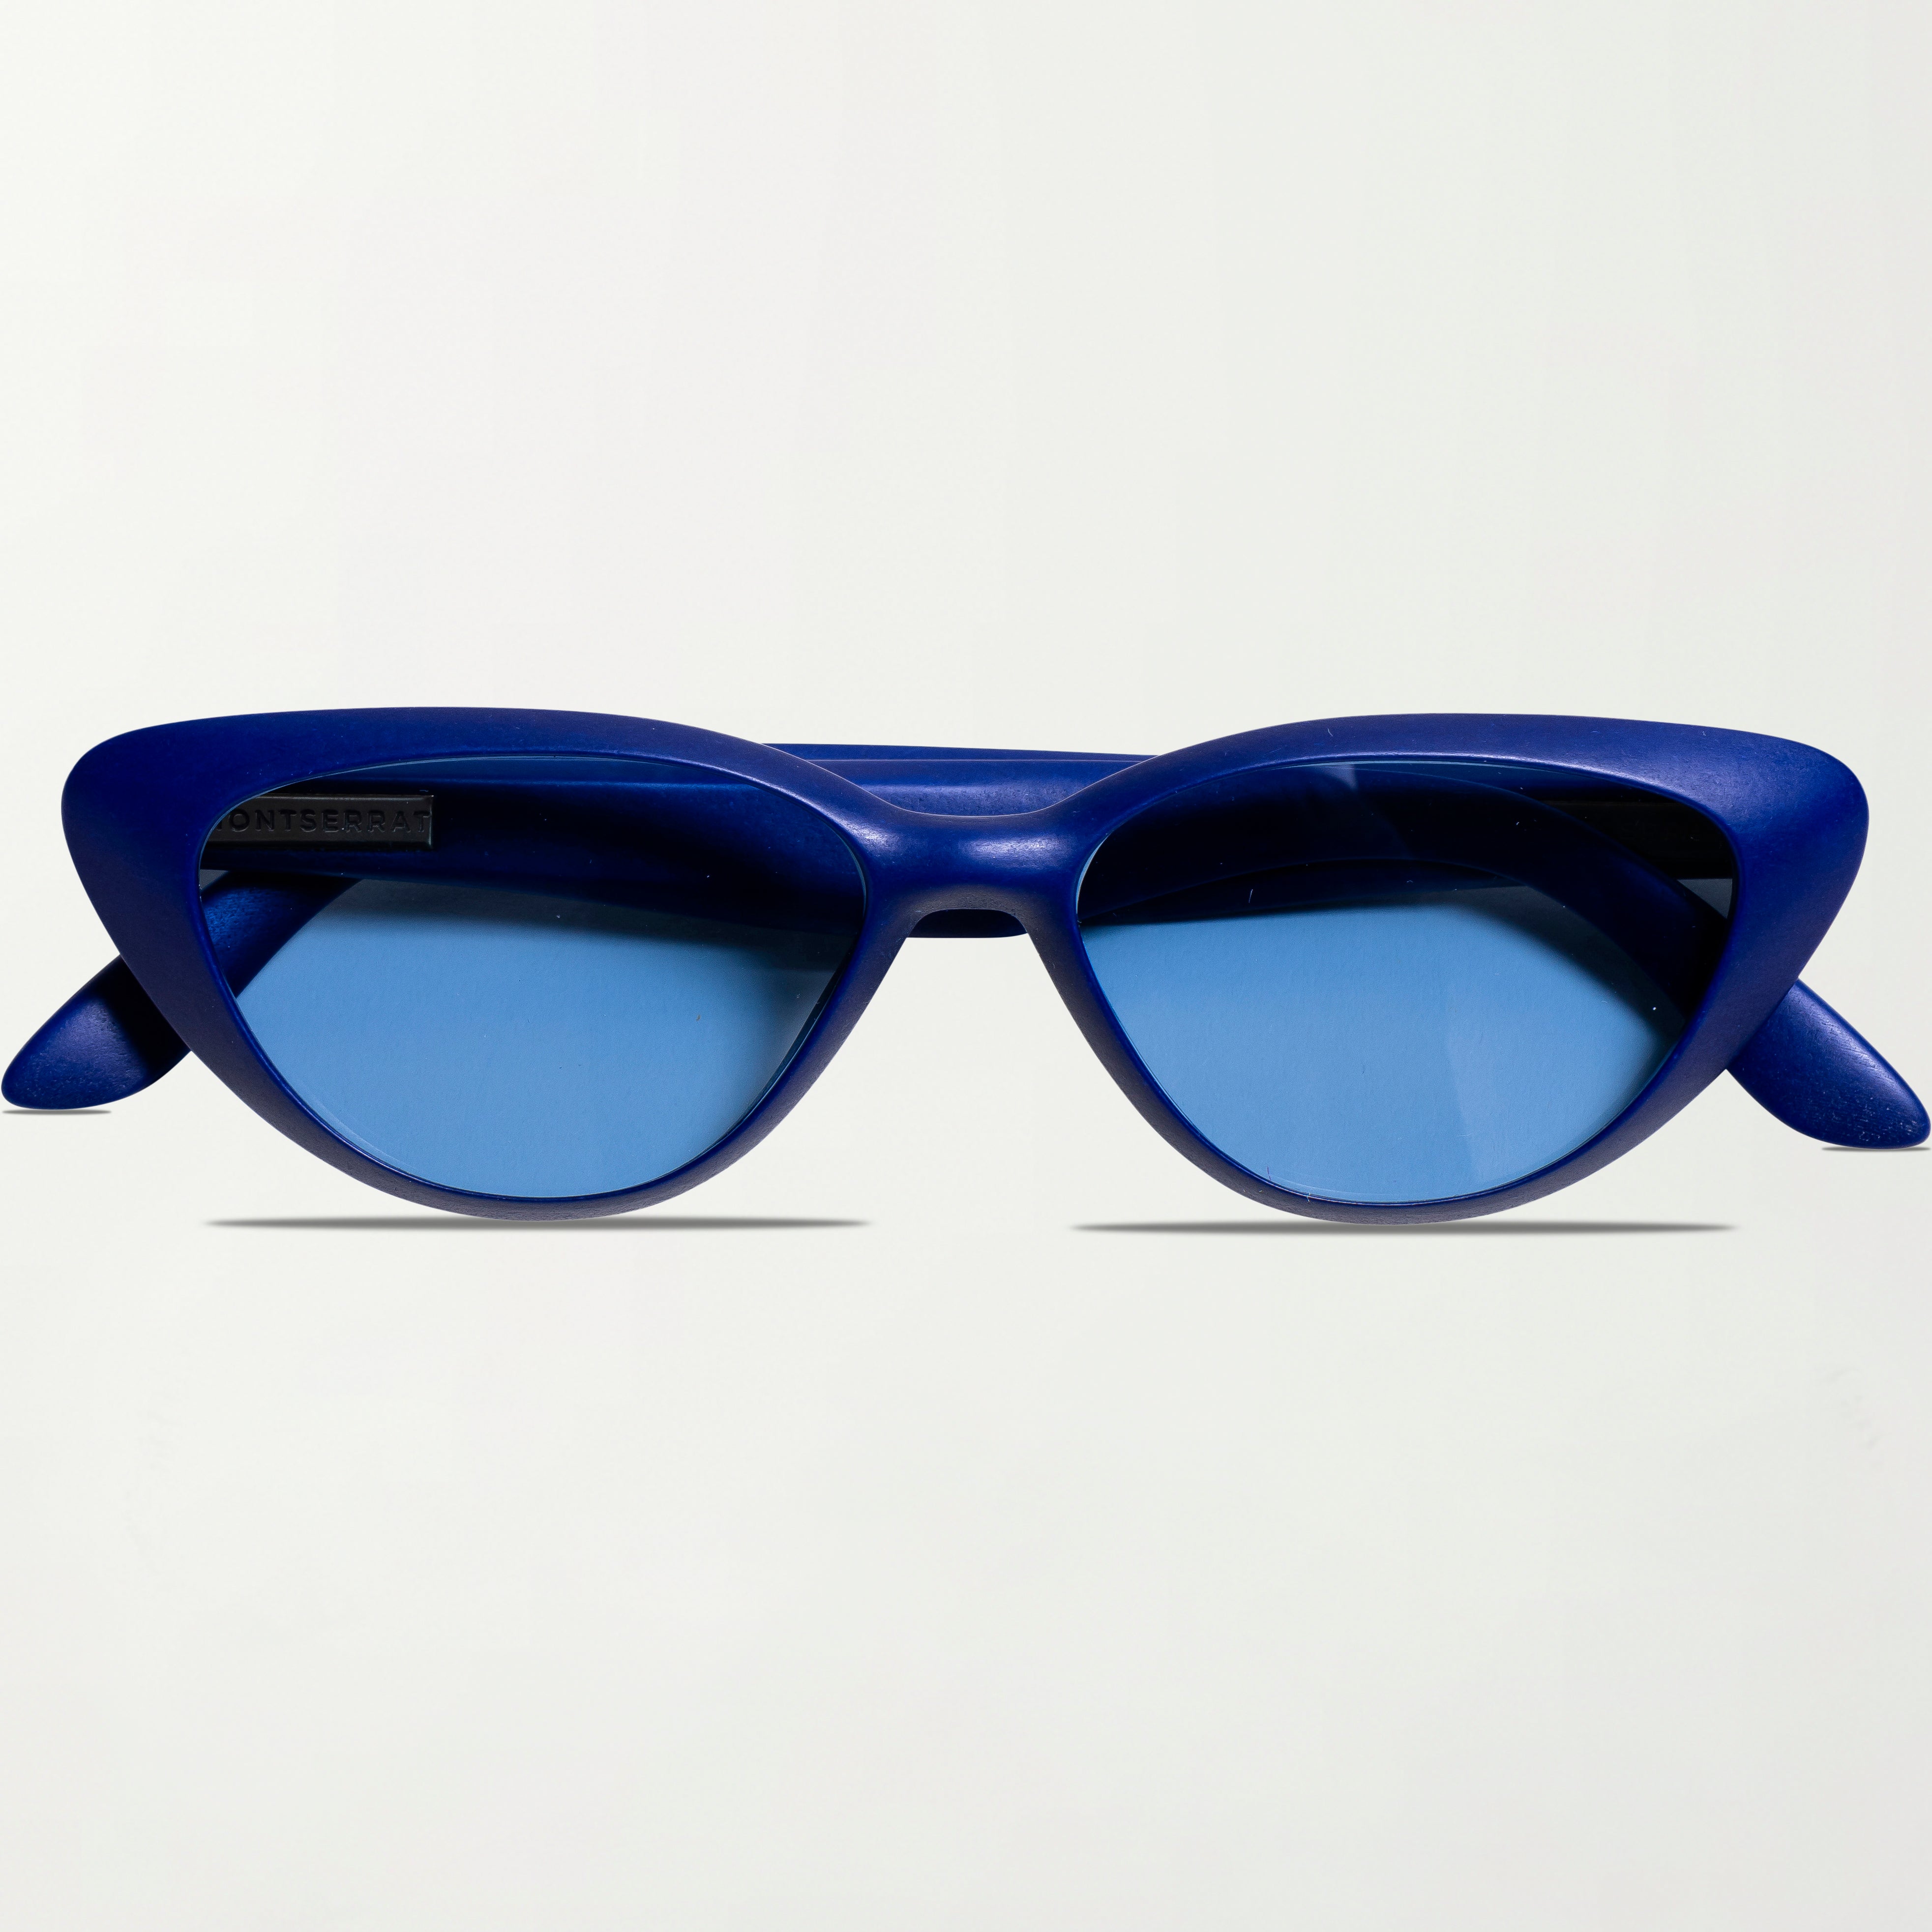 Picture of The Capri Sunglasses in Mediterranean Blue